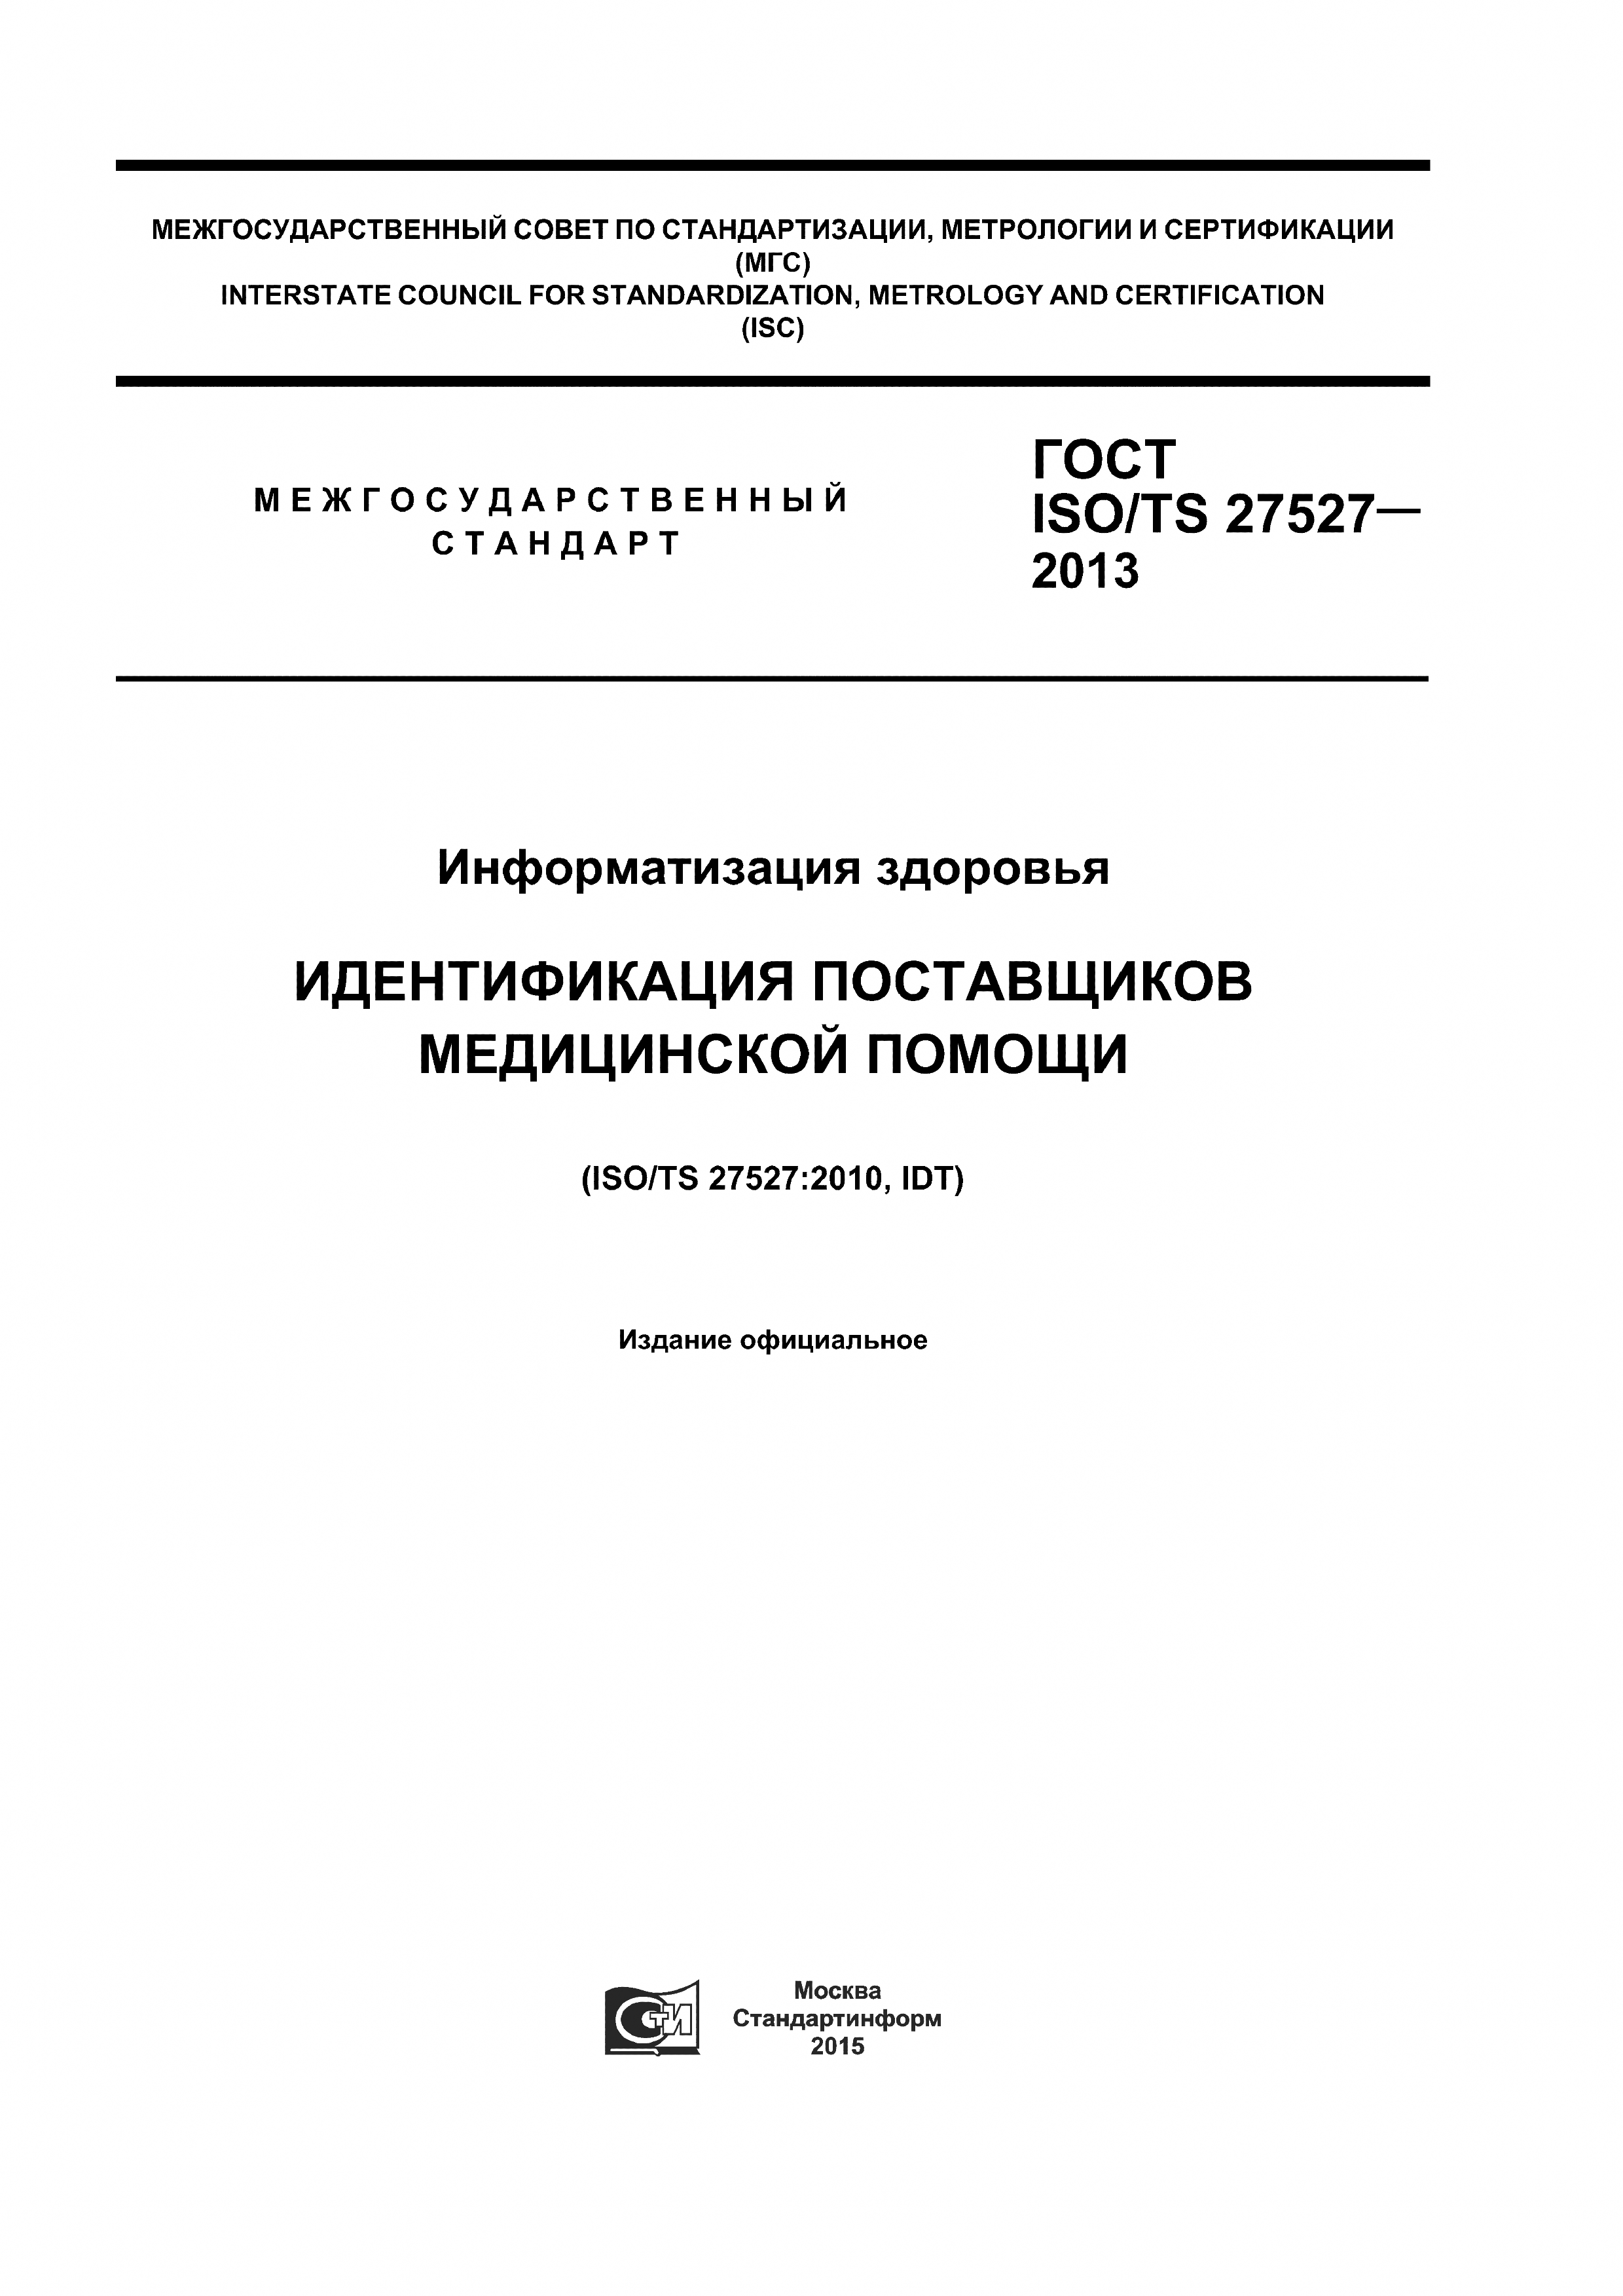 ГОСТ ISO/TS 27527-2013